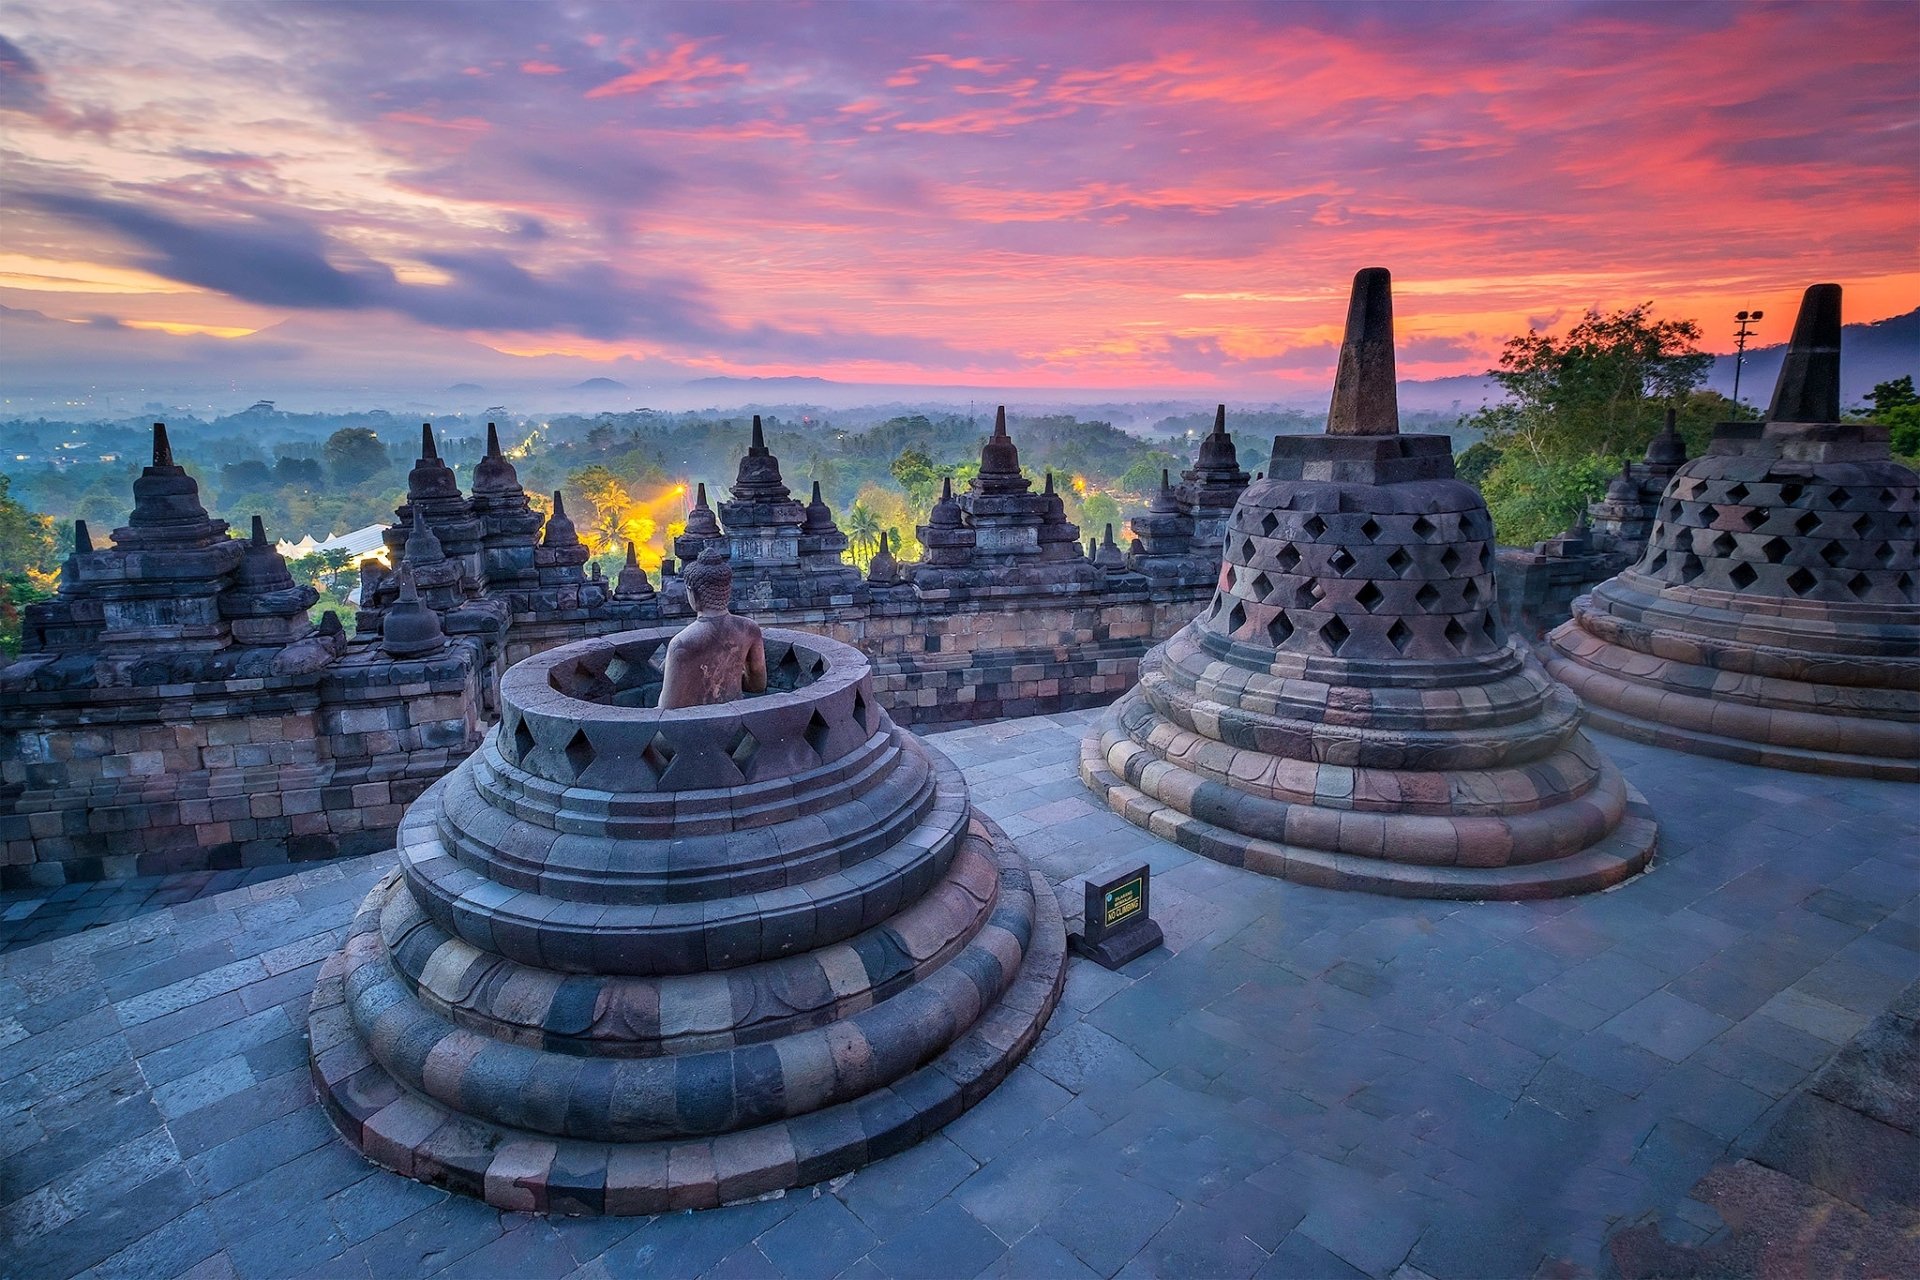 Borobudur is a 9th century Mahayana Buddhist temple in 